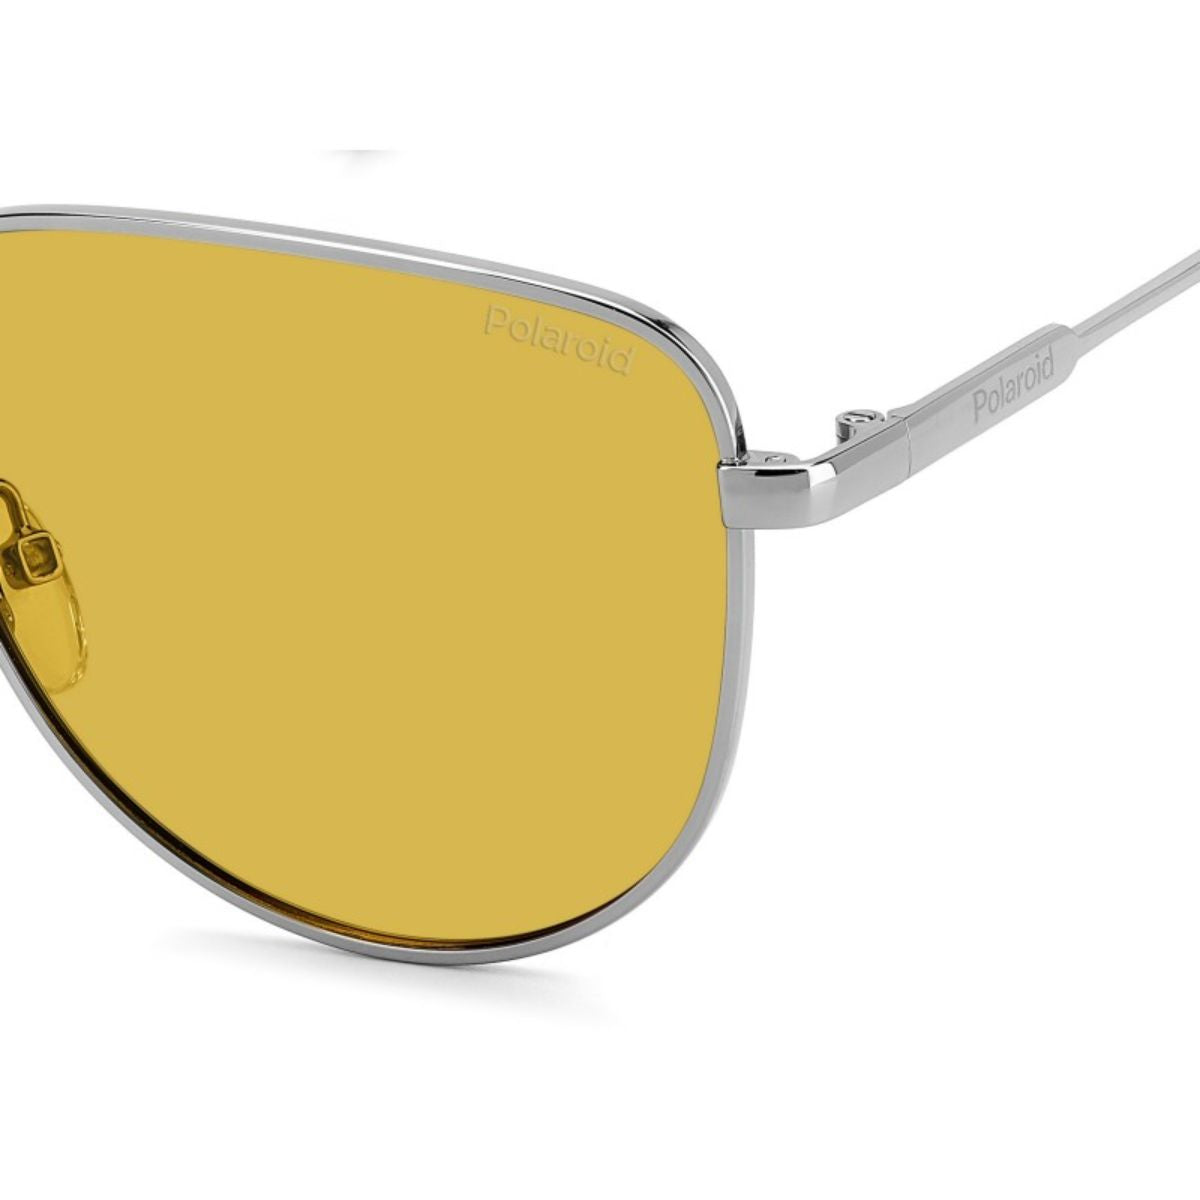 "Stylish Metal Sunglasses Under 7k Budget Eyeglasses For Men's and Women's At Optorium"